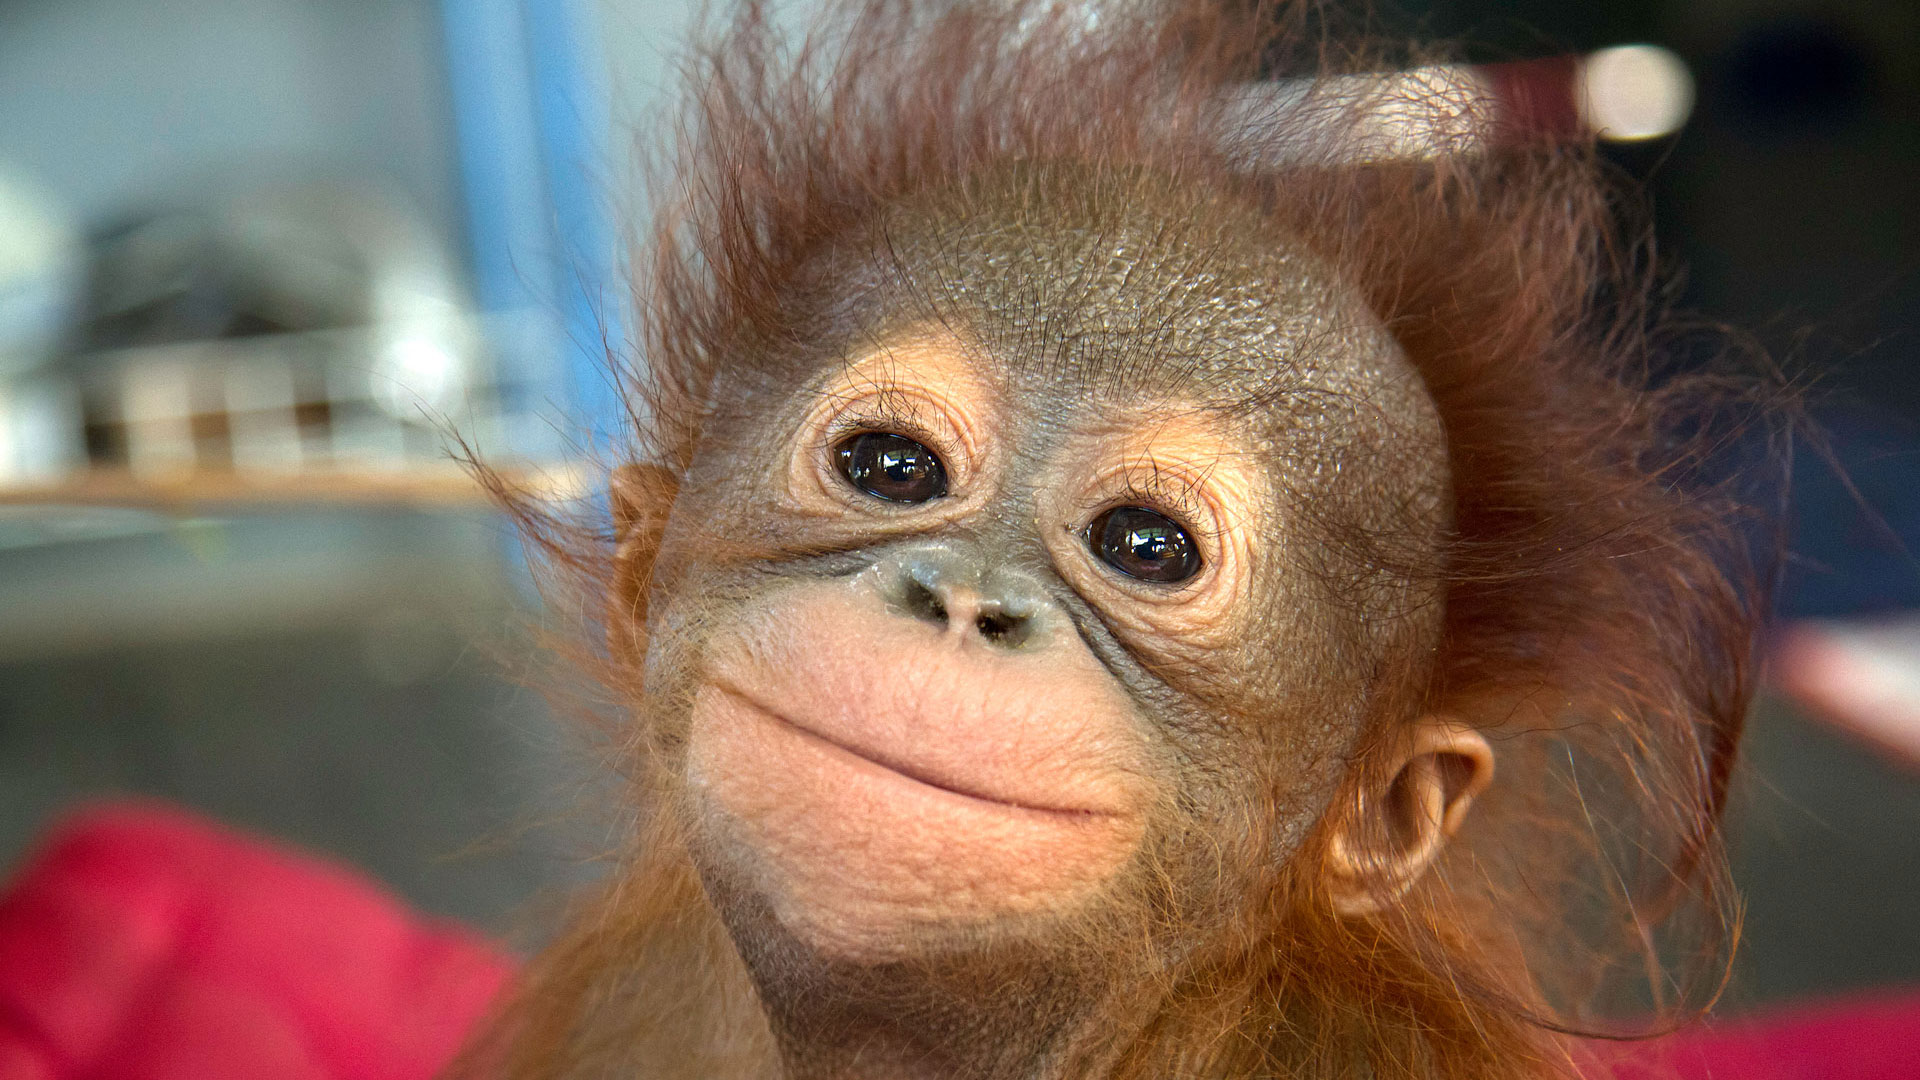 Orangutan Outreach